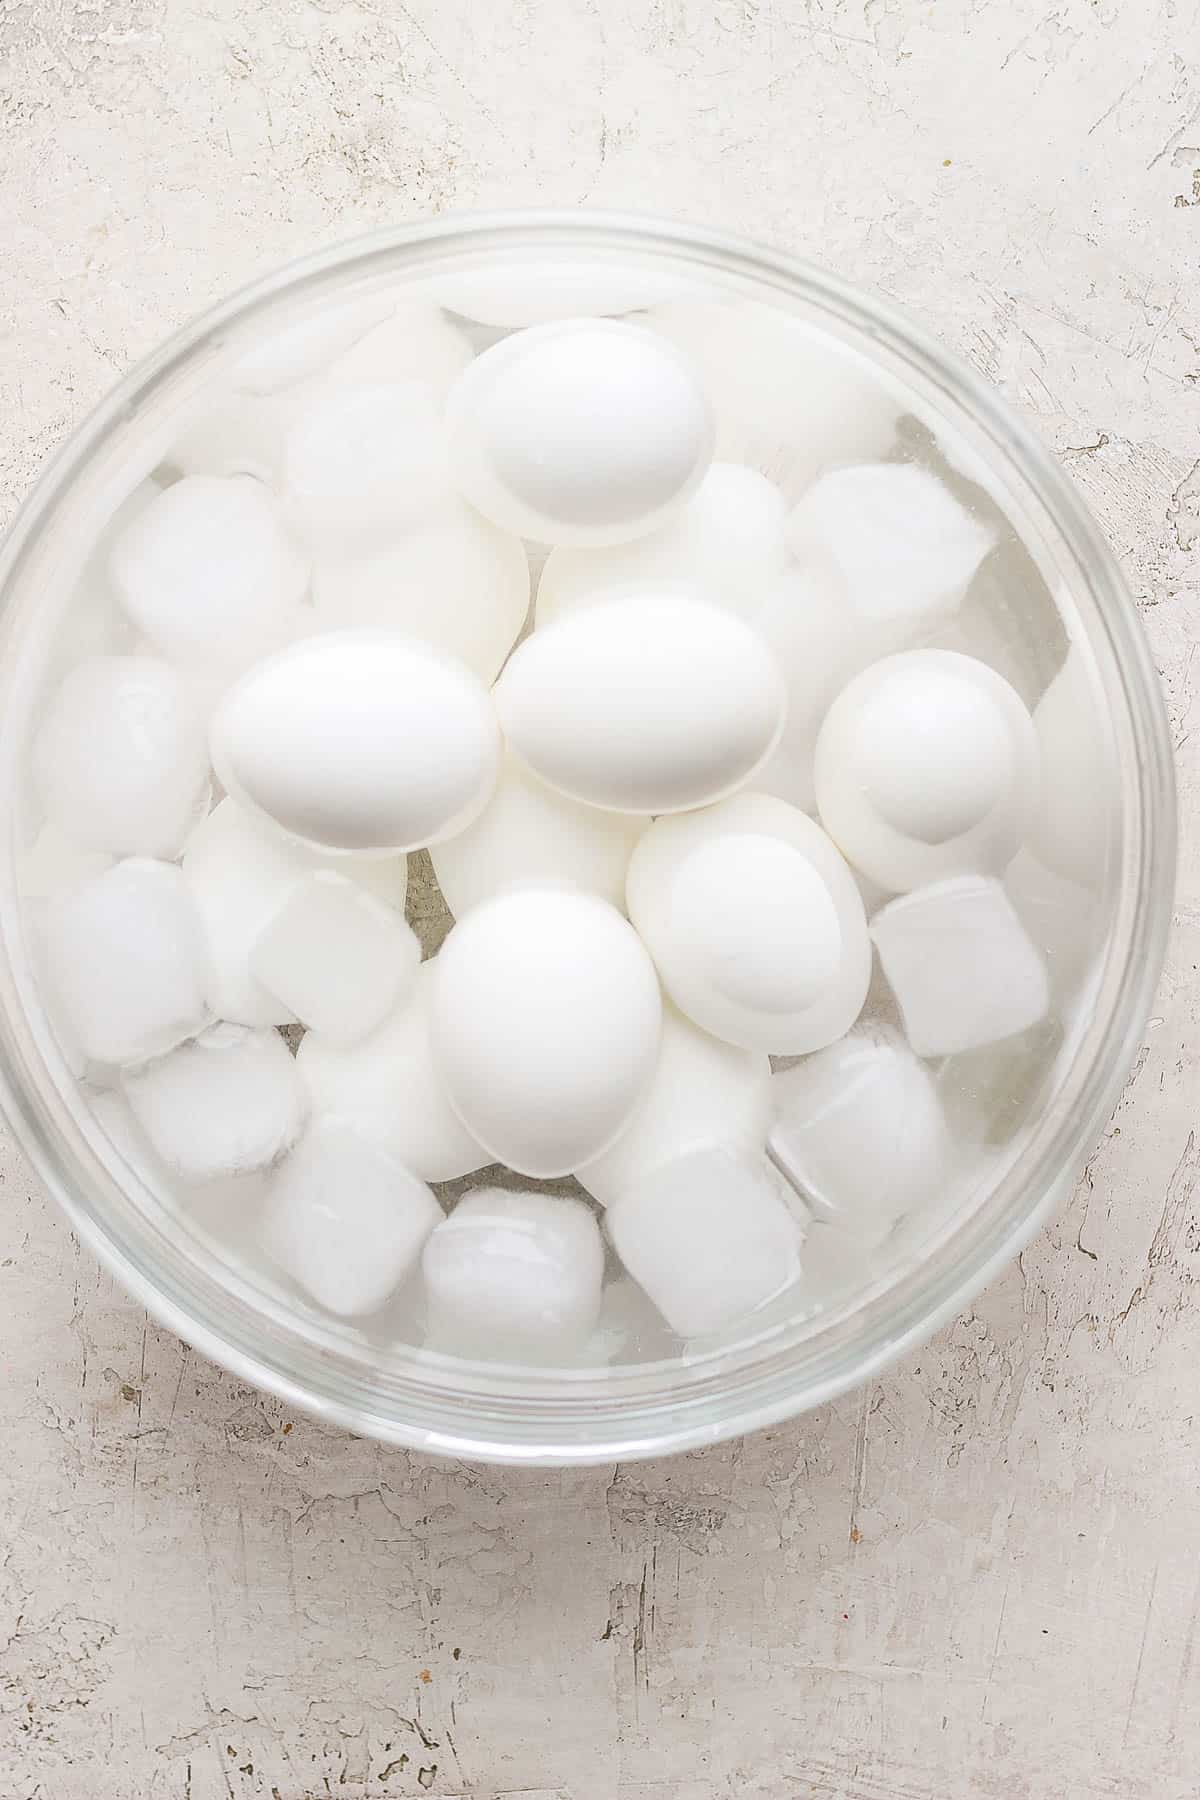 Twelve eggs in an ice bath.